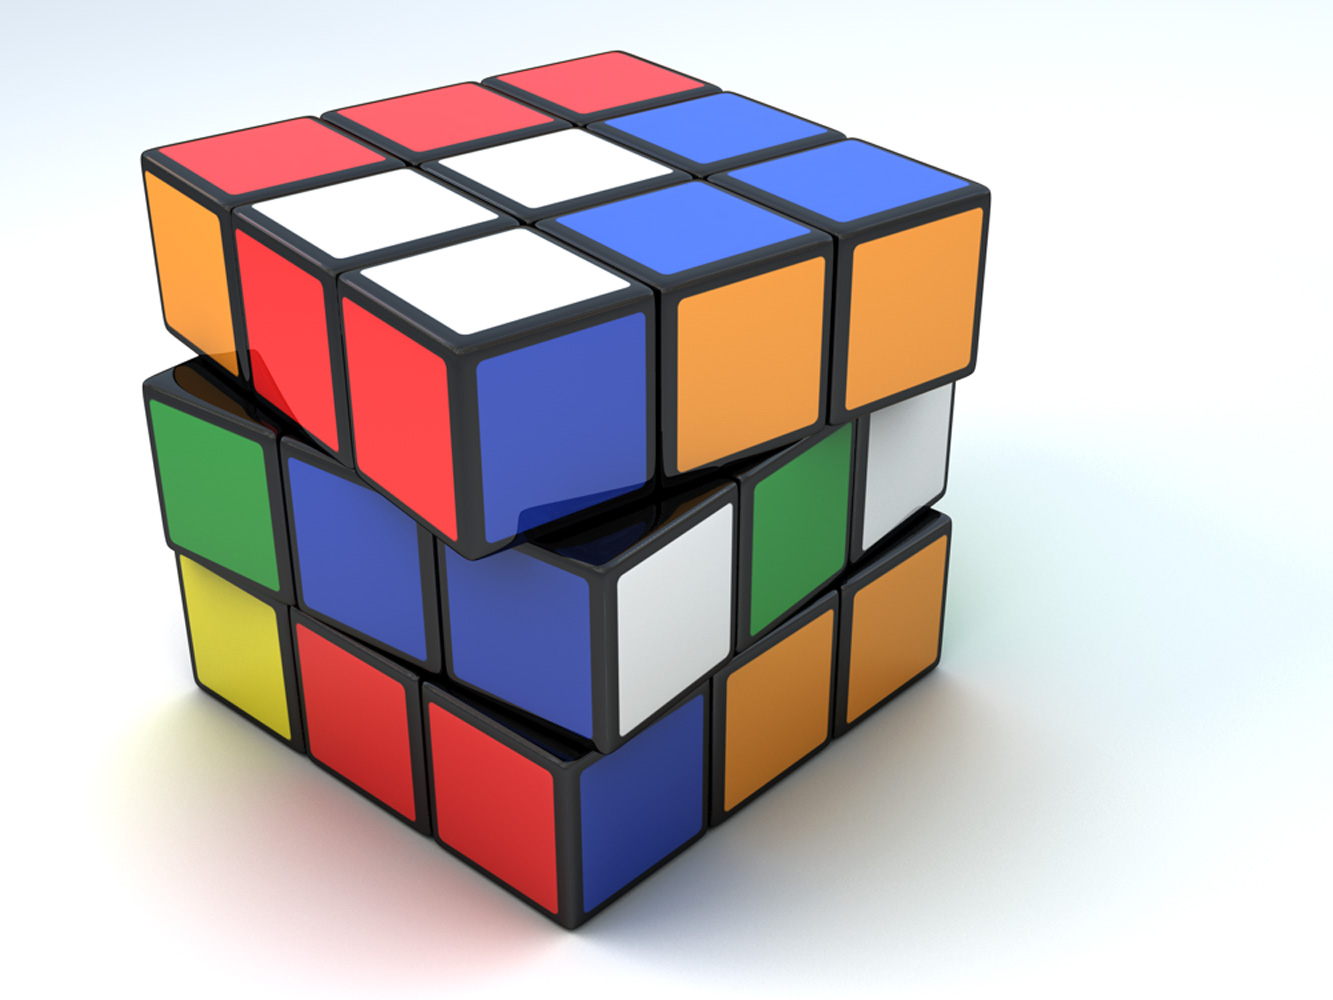 Vs cube. Кубик Рубика на белом фоне. Кубик Рубика параллелепипед. Кубик Рубика арт. Кубик Рубика мультяшный.